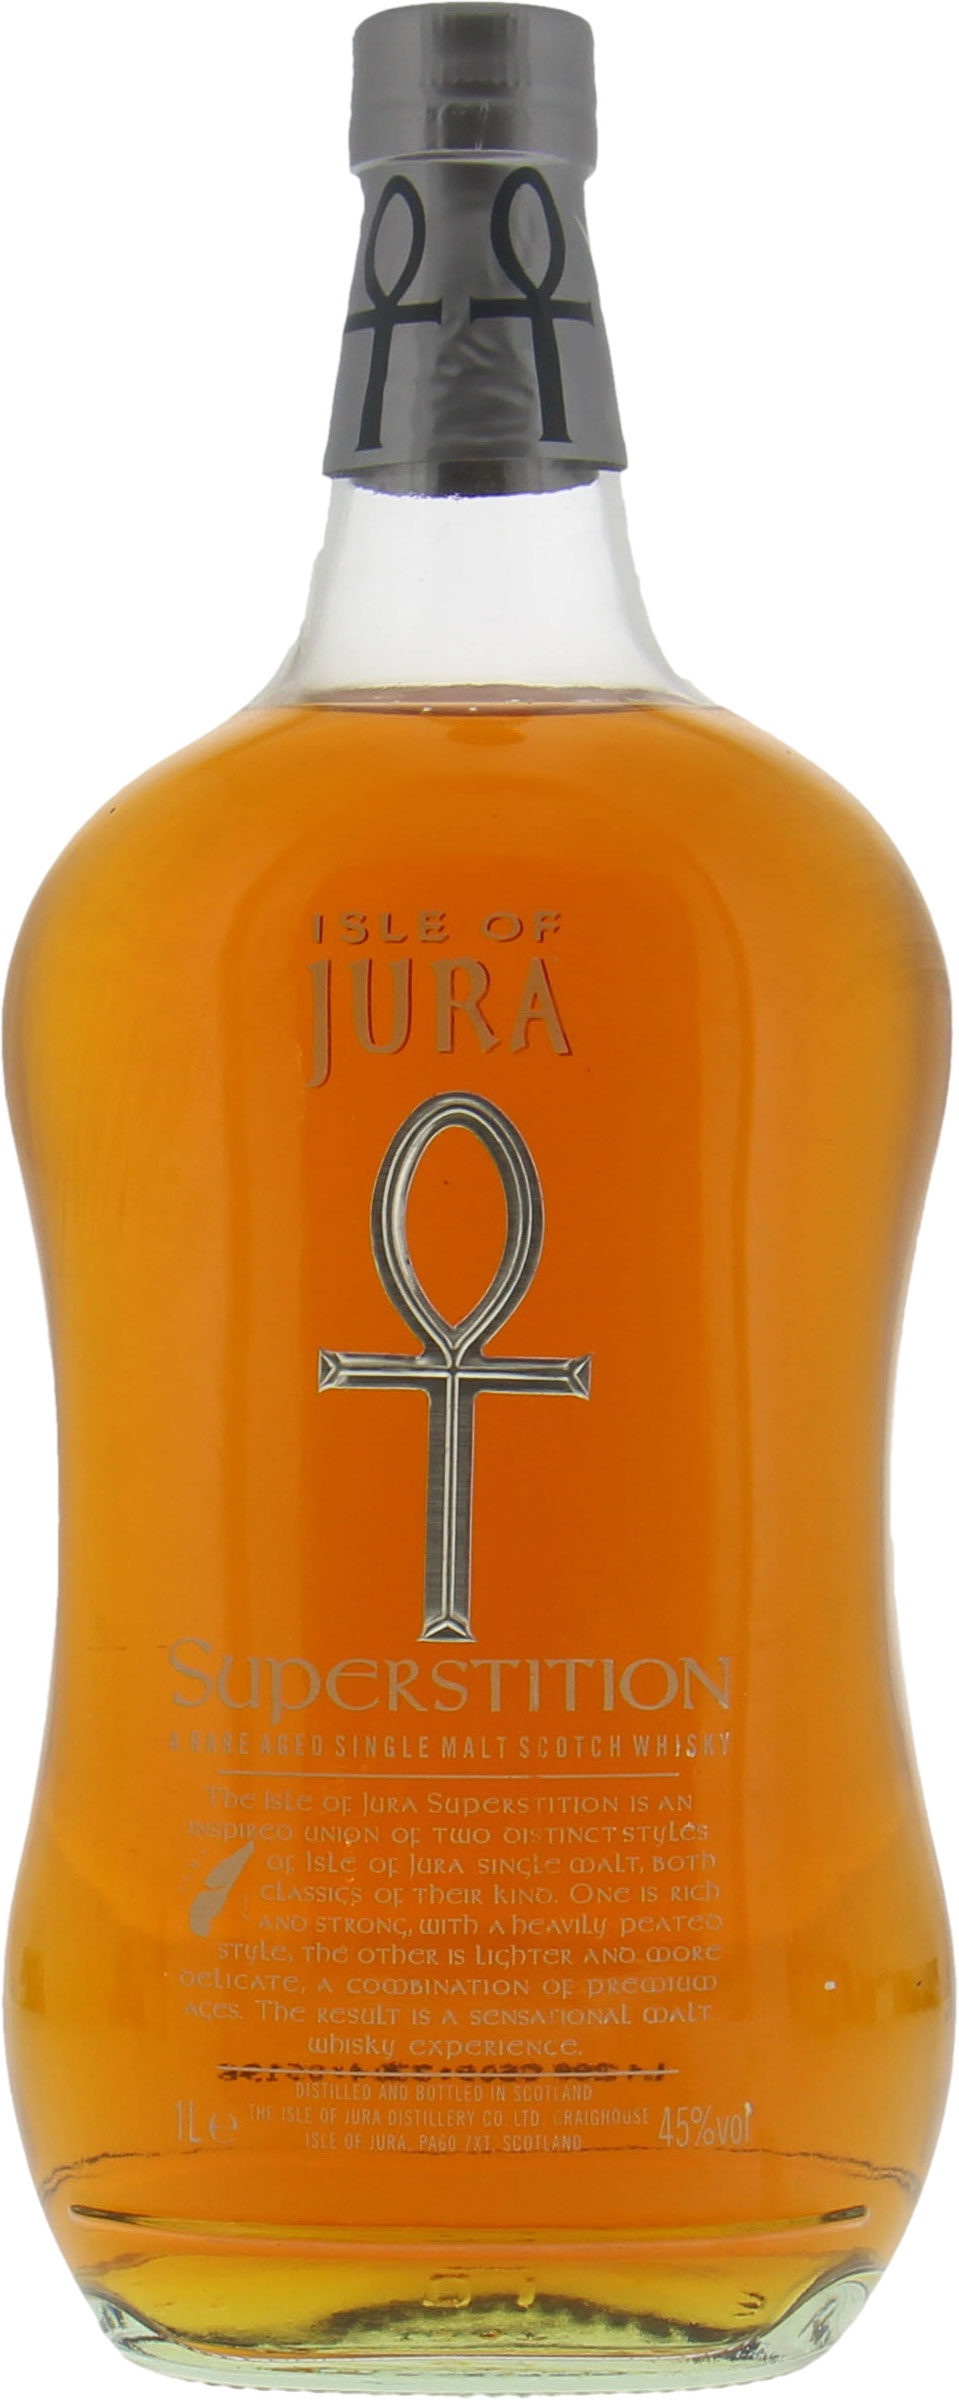 Jura - Superstition 45% NV No Original Box Included